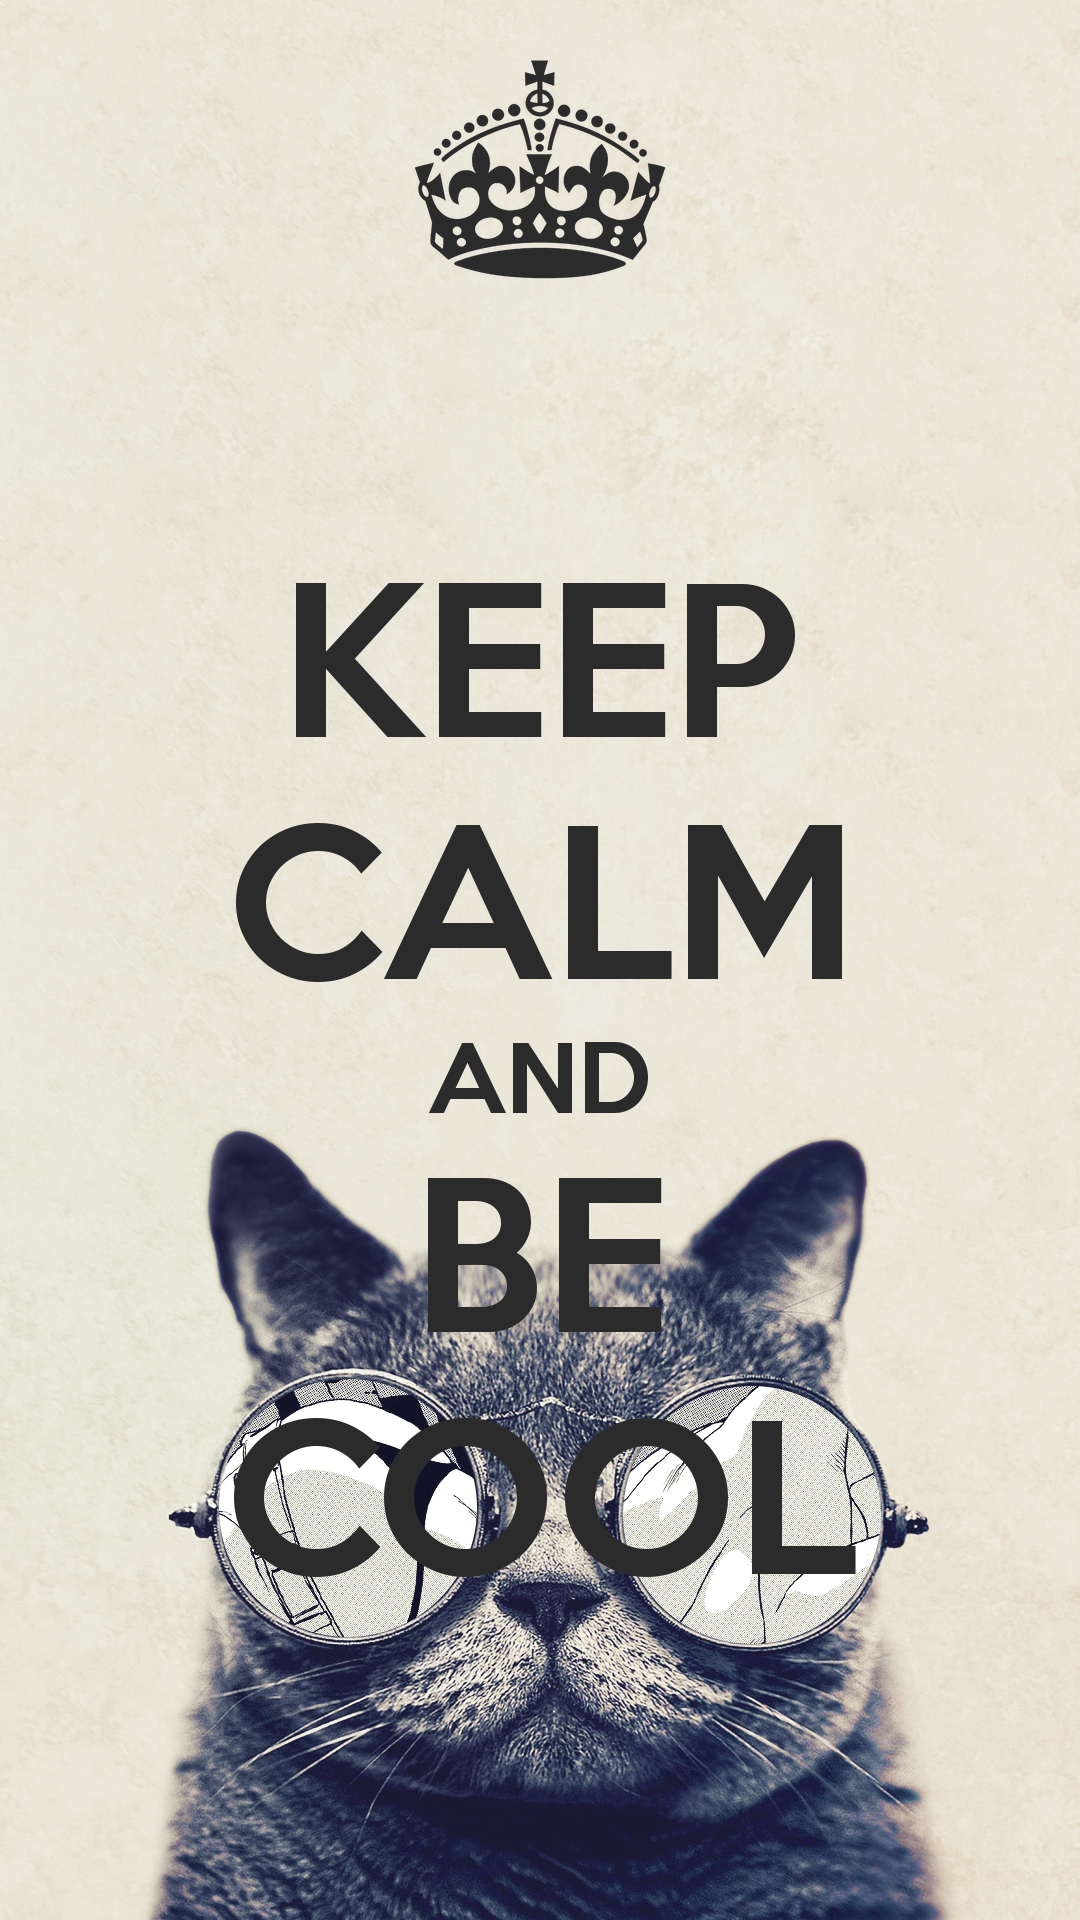 KEEP CALM AND BE COOL. Calm quotes, Keep calm wallpaper, Keep calm